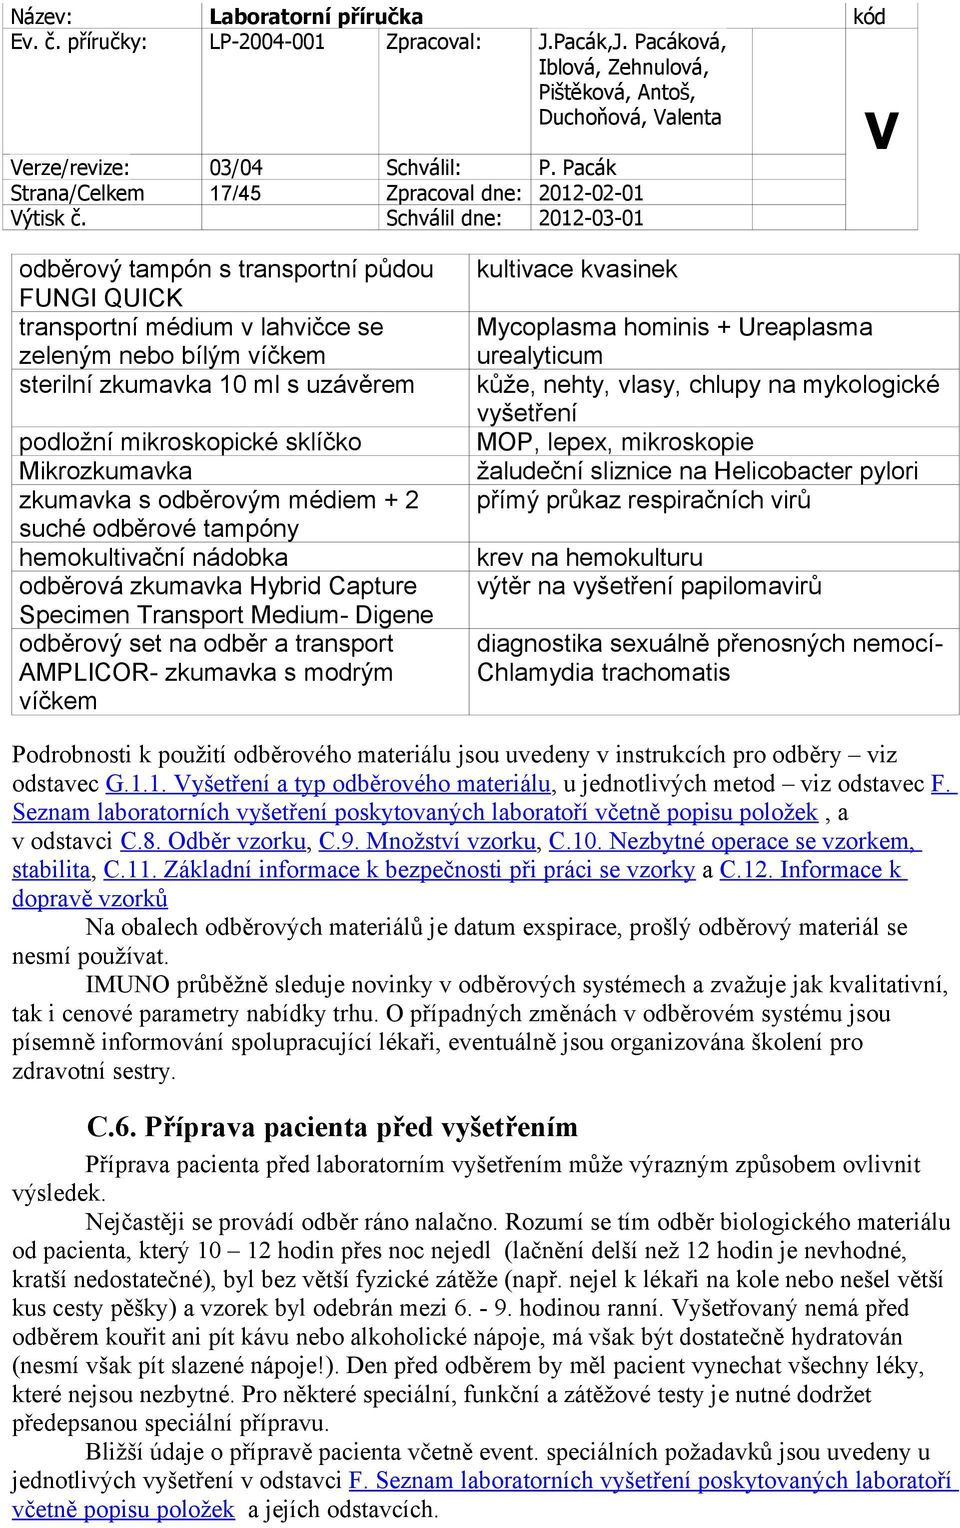 IMUNO s.r.o., Laboratoře klinické chemie Osvobození 1138, Jirkov, - PDF  Free Download